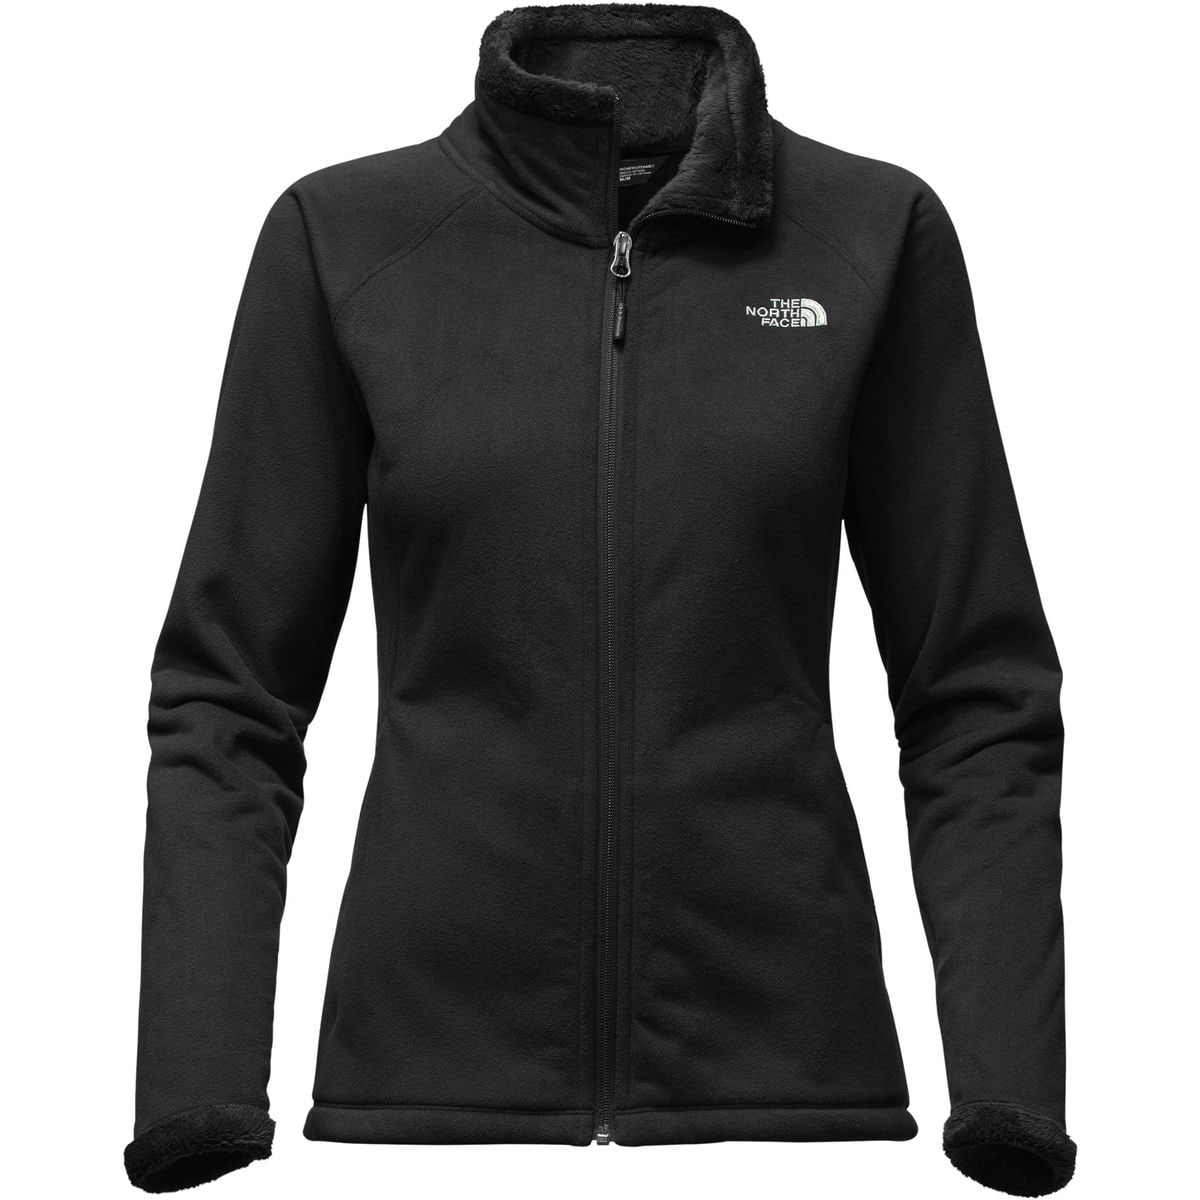 The North Face Morninglory 2 Full-Zip Fleece Jacket - Women's | eBay